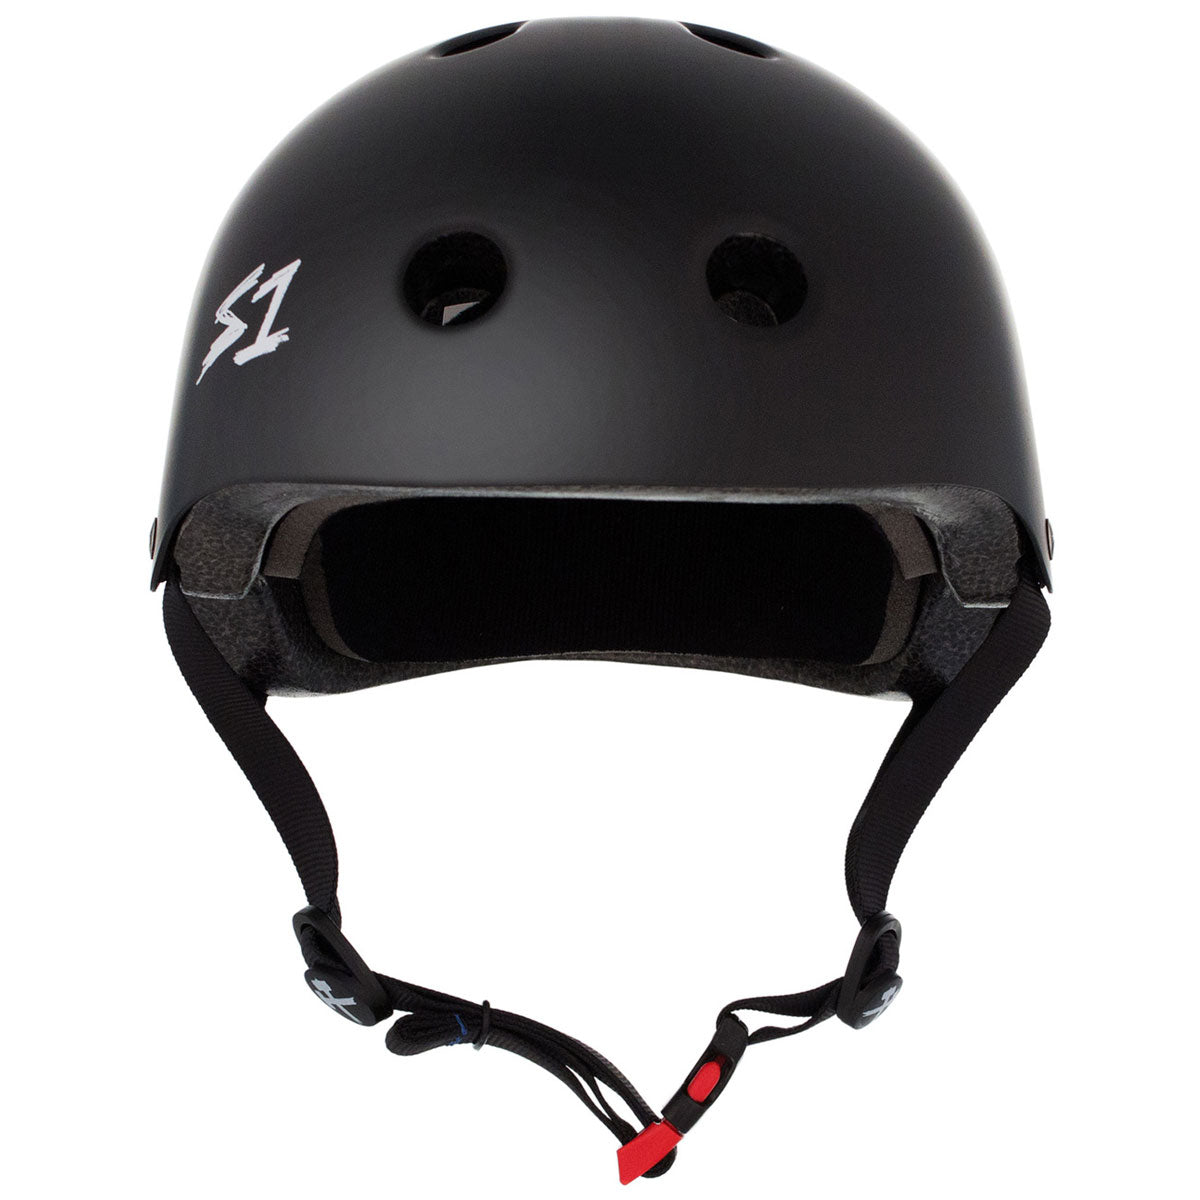 S-One Mini Lifer Helmet - Black Matte image 3